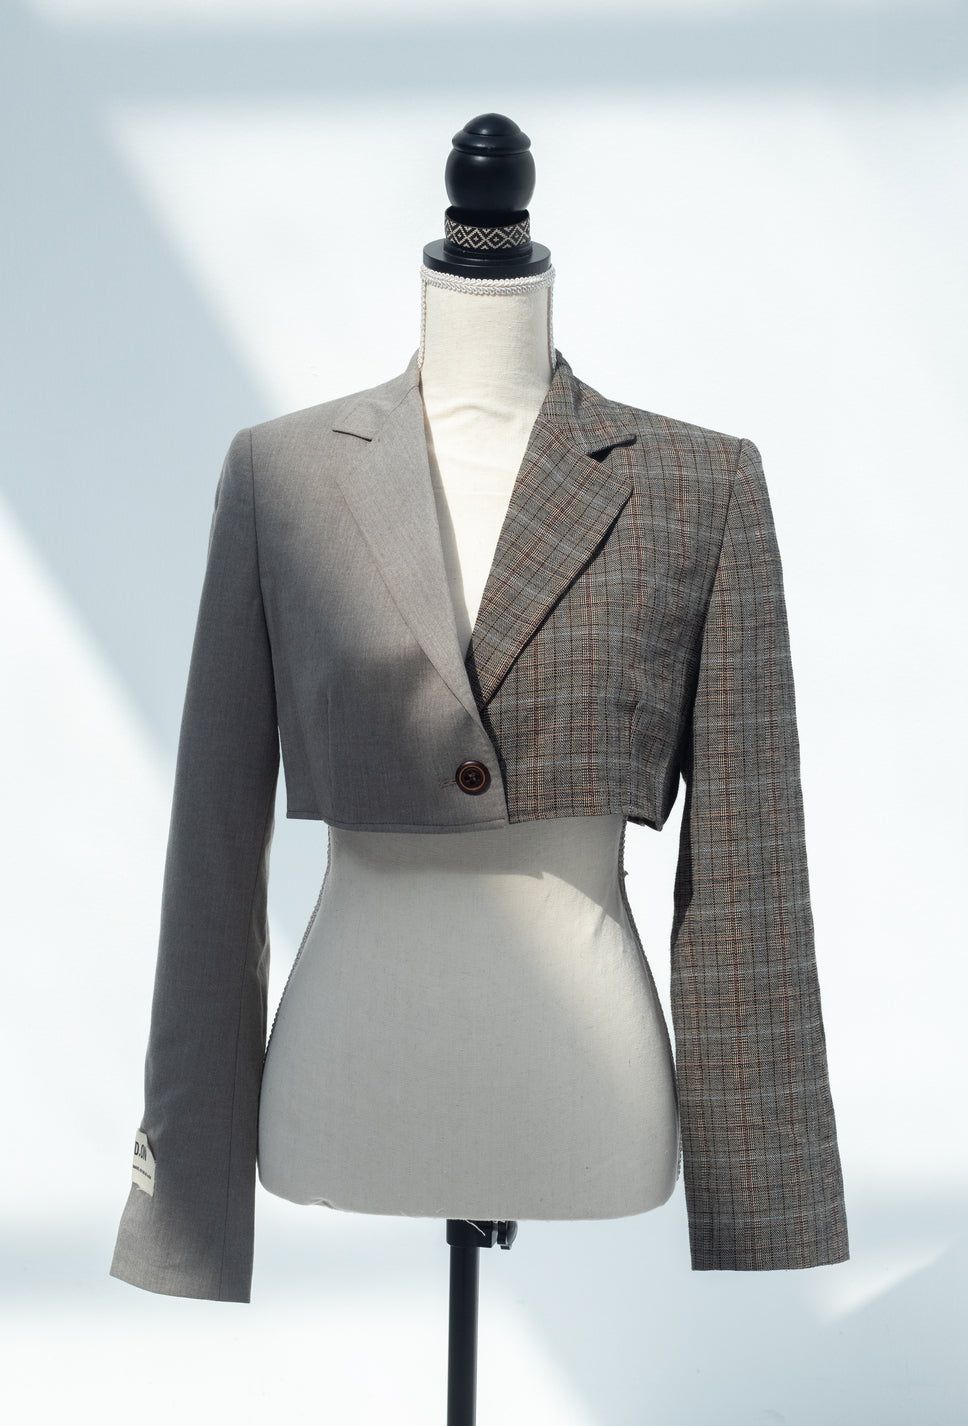 Mens Half Black Silver Sequin Shawl Lapel Suit Jacket Blazer Tuxedo Show  Stage | eBay